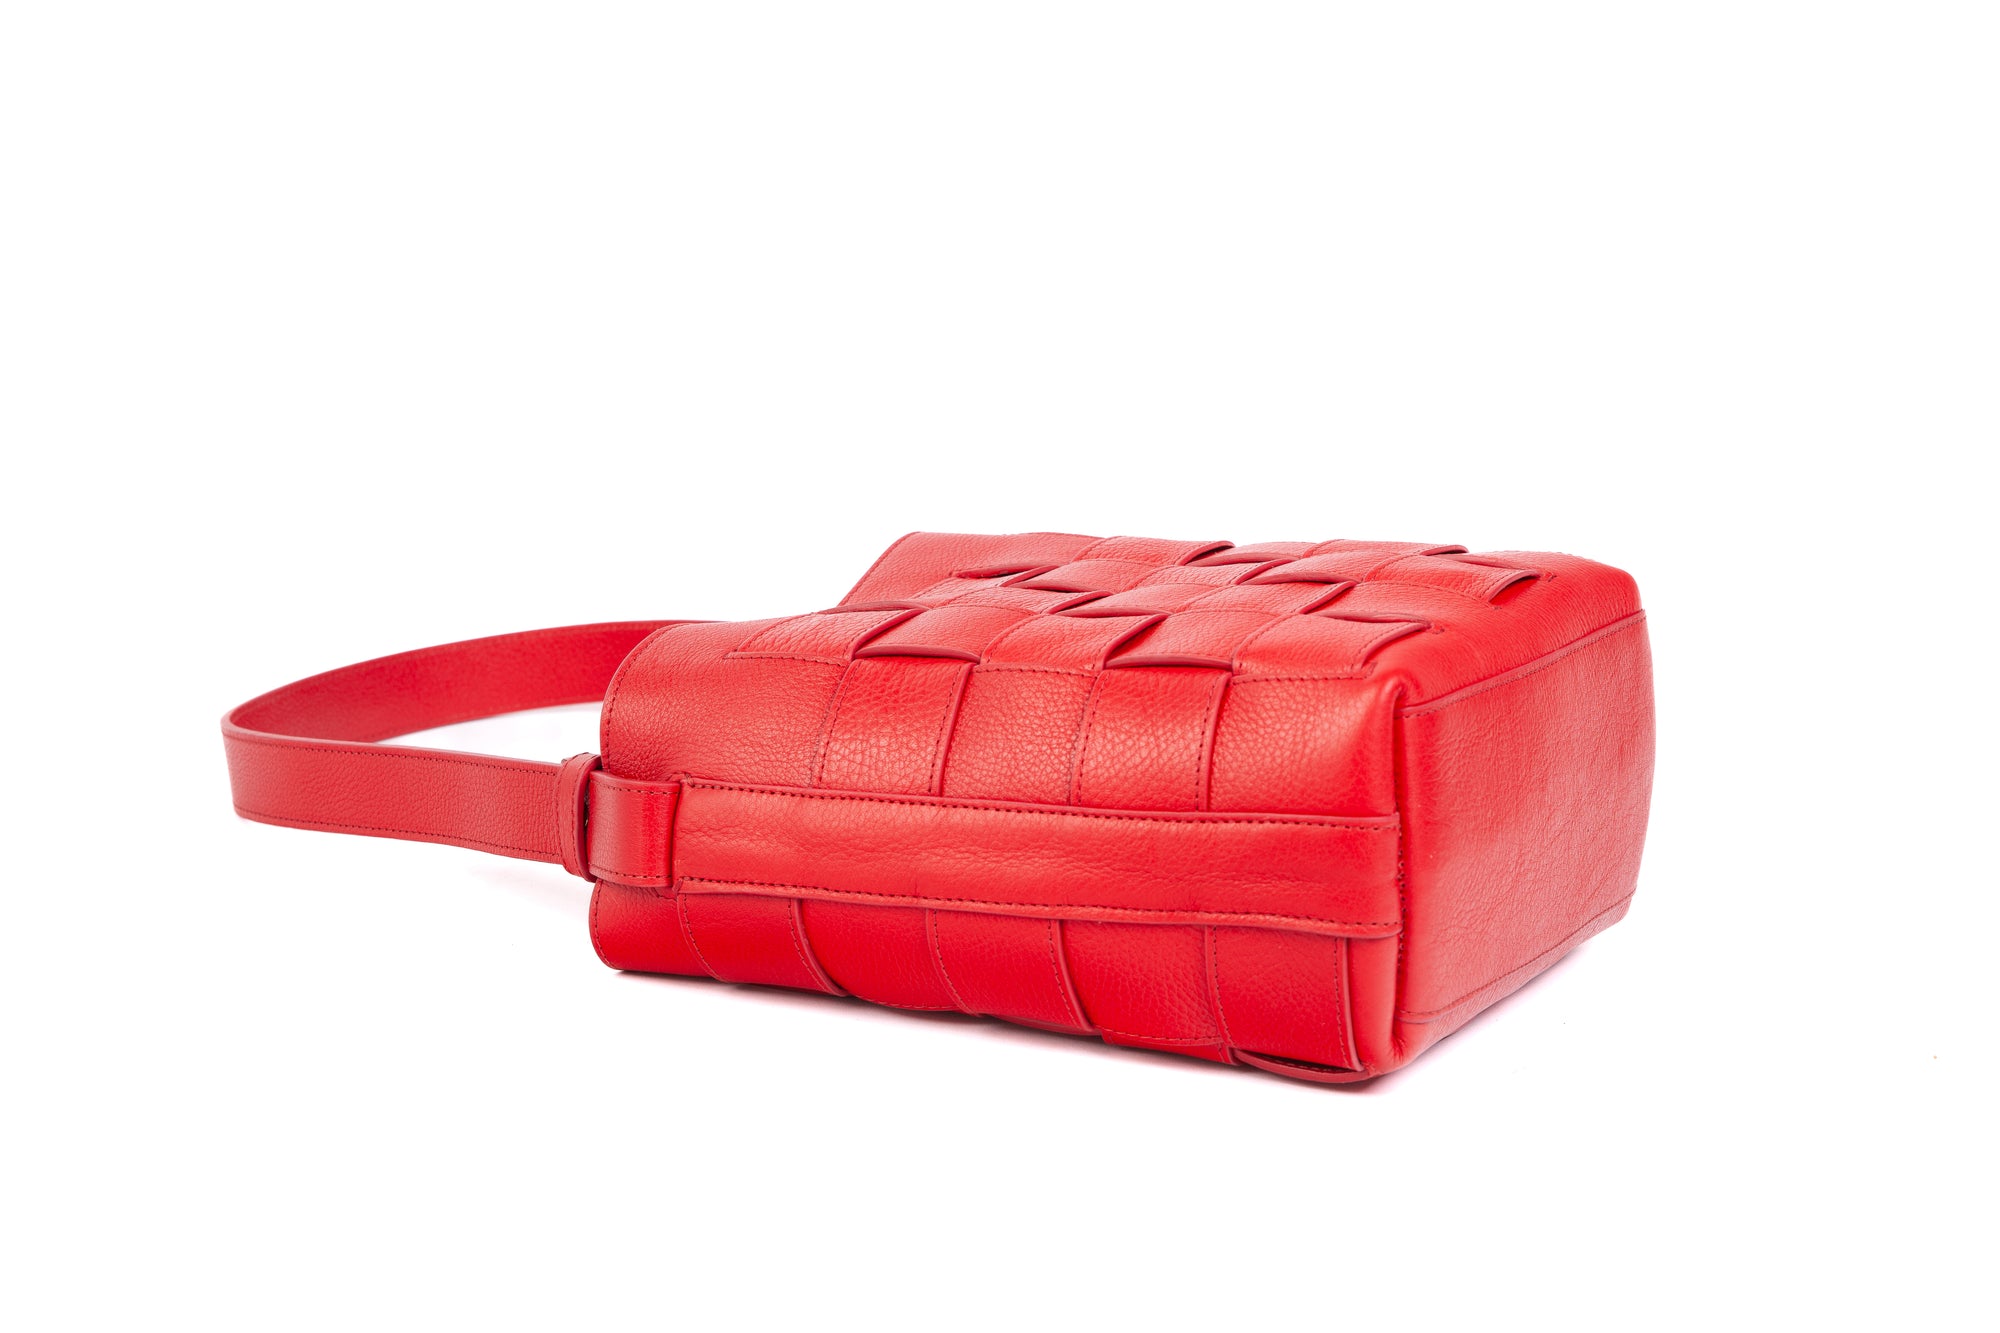 Mini Woven Leather Bucket Shoulder Bag Pop Red